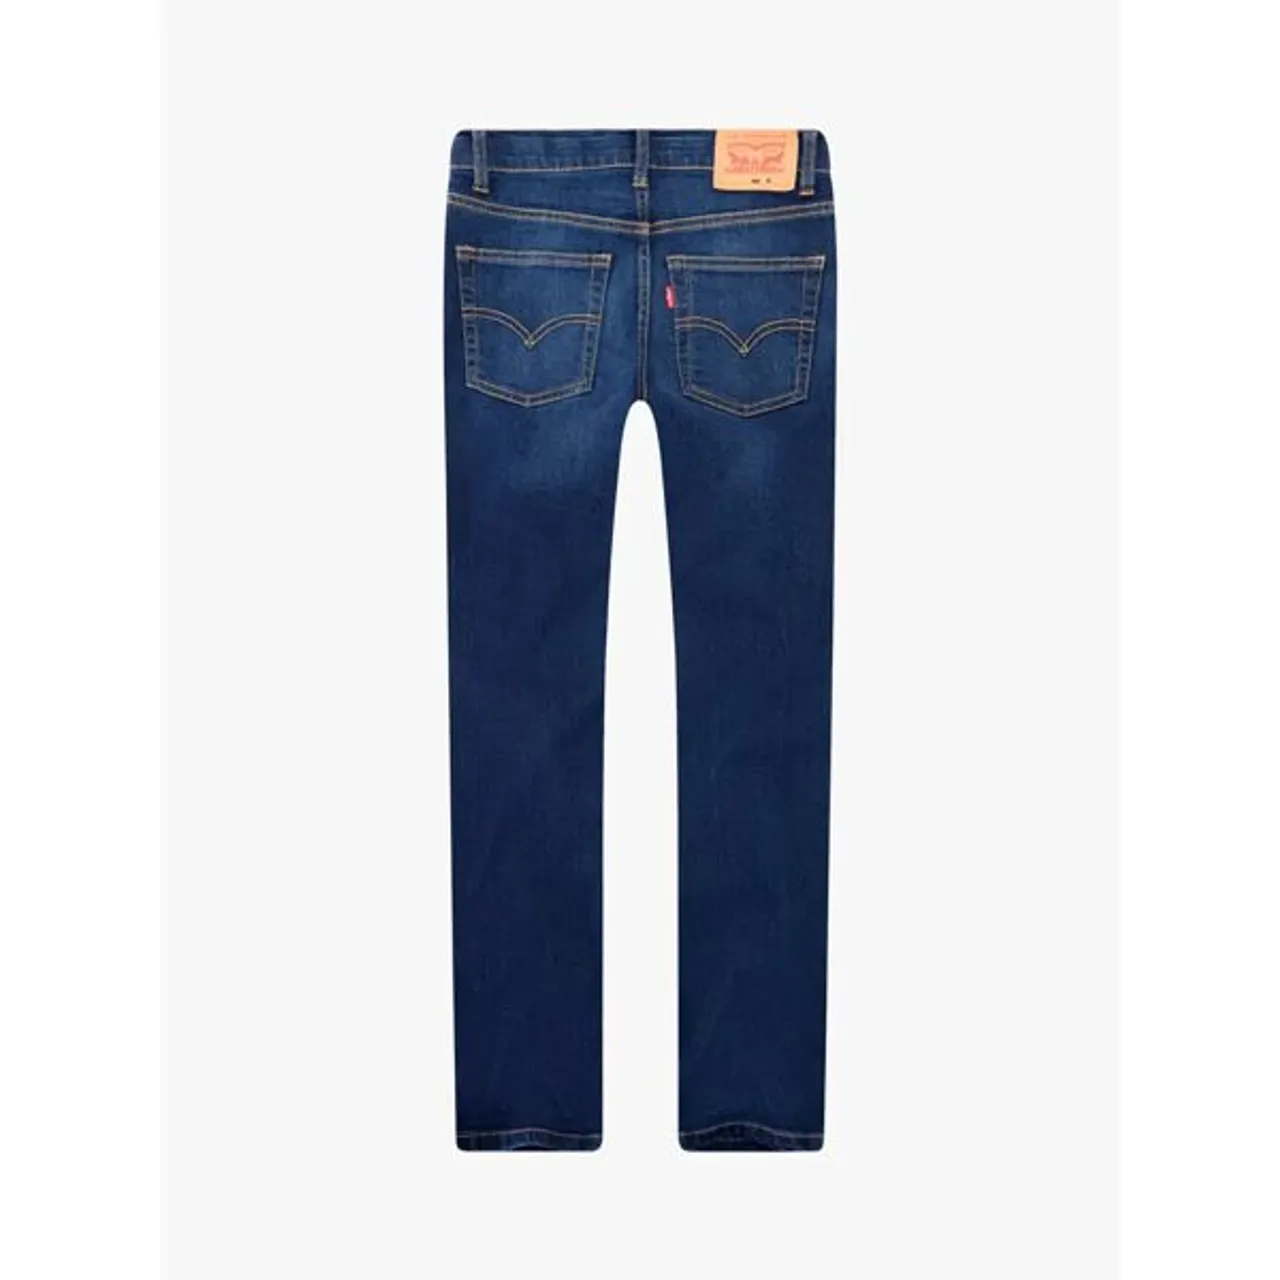 Levi's 510 Skinny Fit Jeans, Dark Blue - Dark Blue - Male